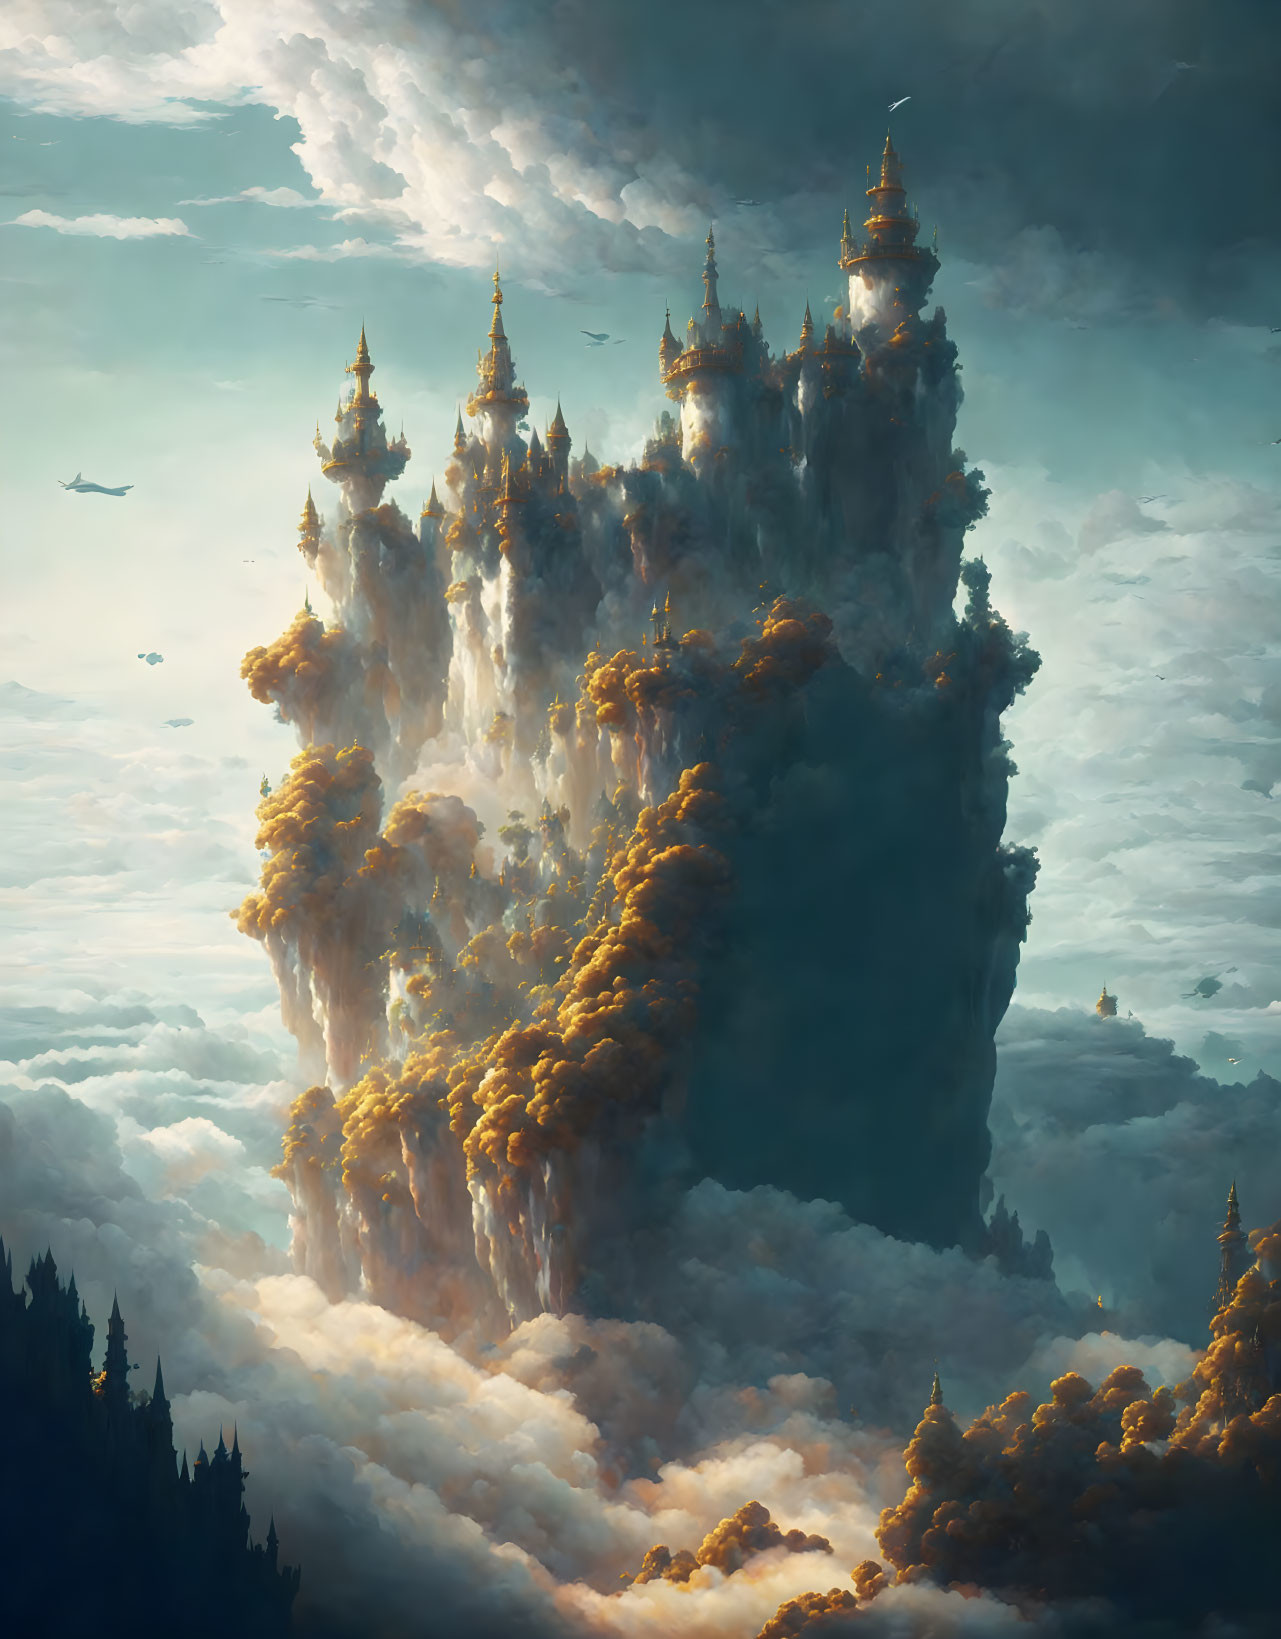 Kingdom in the clouds